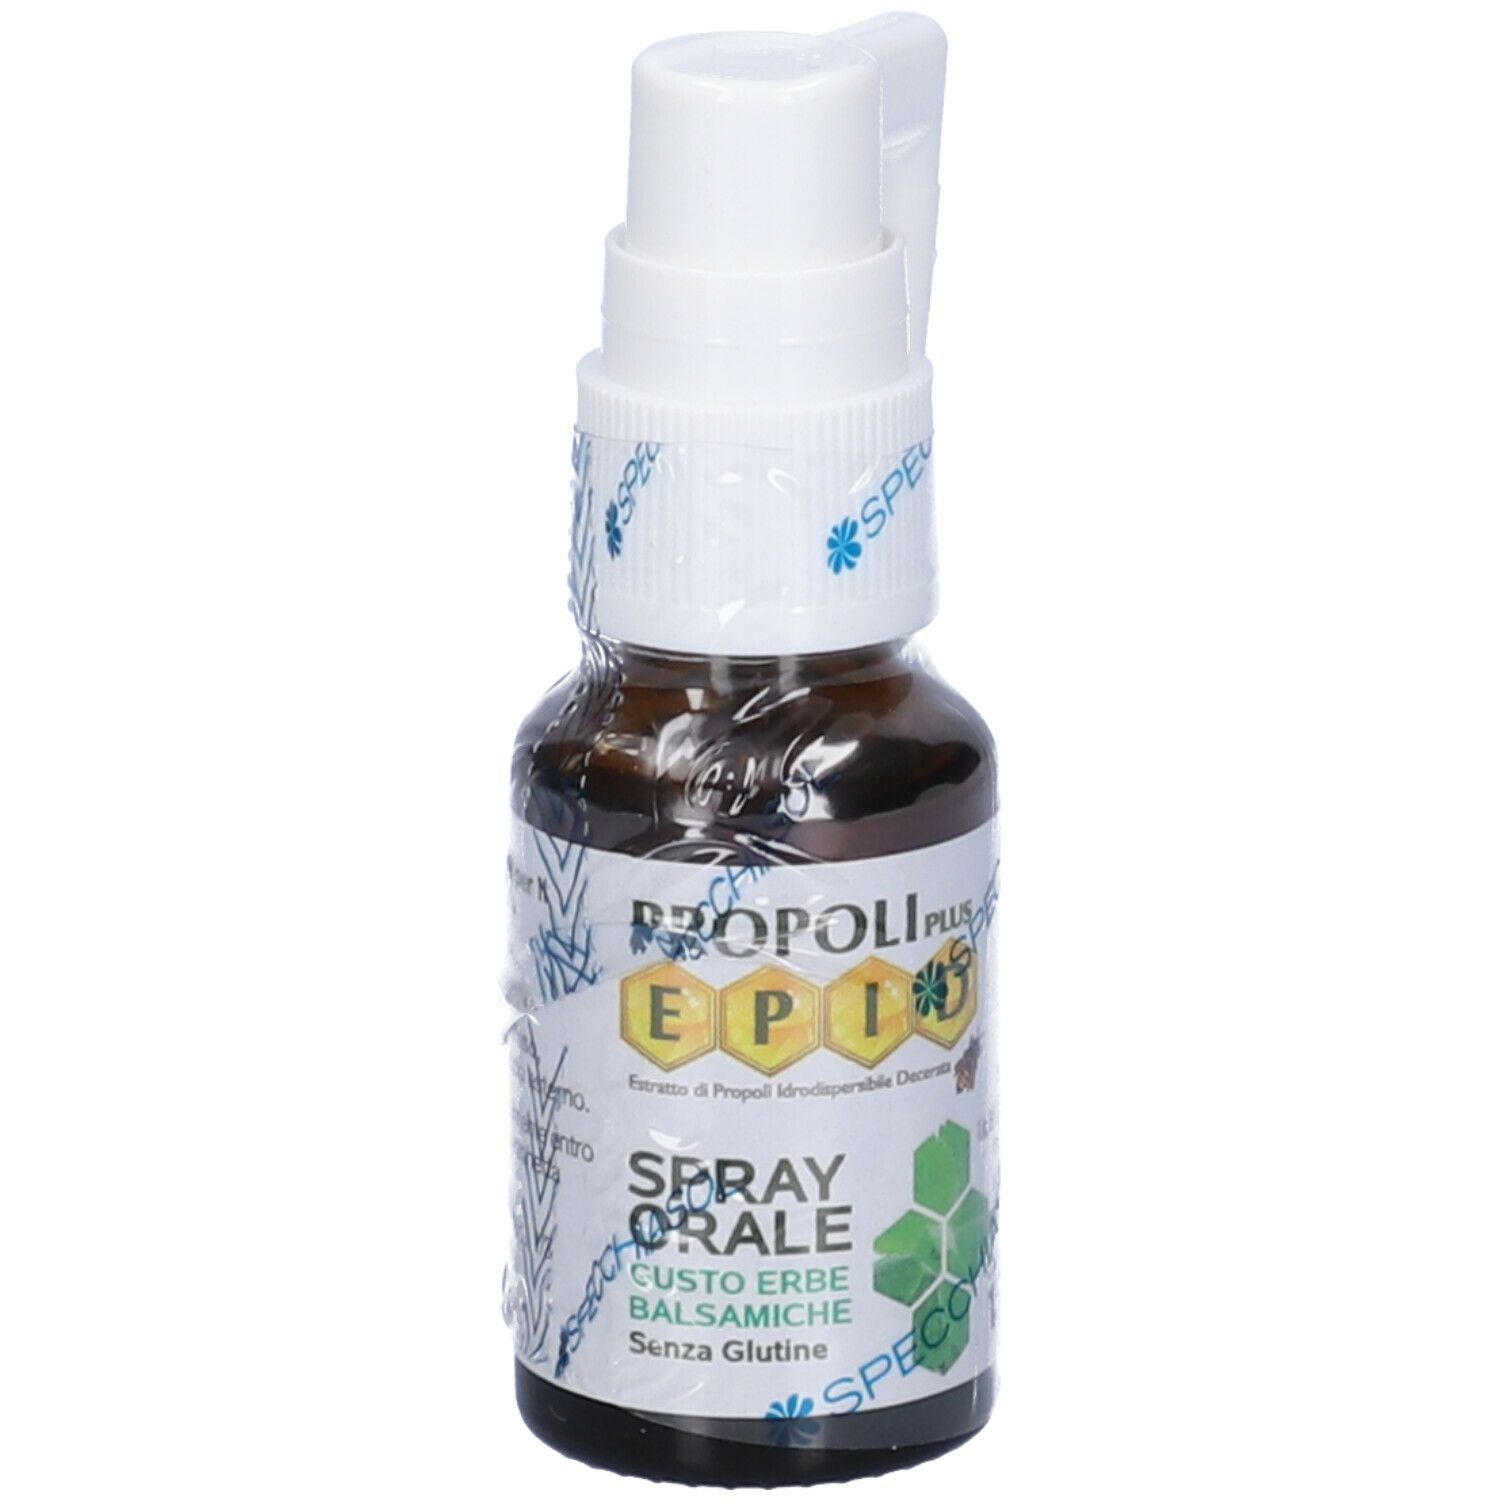 EPID® Propoli Plus Spray Orale